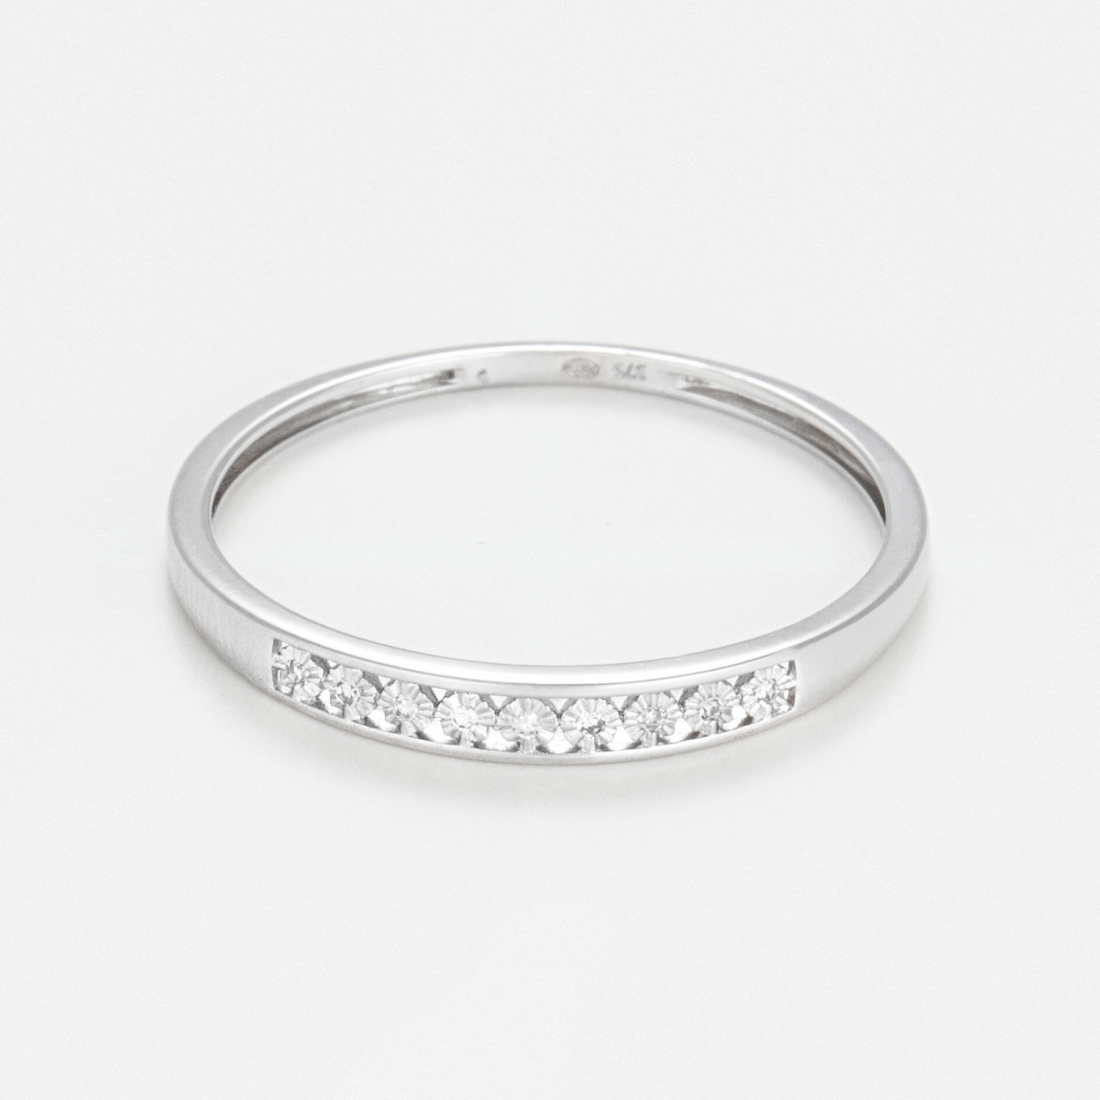 Women's 'Romantic Love' Ring